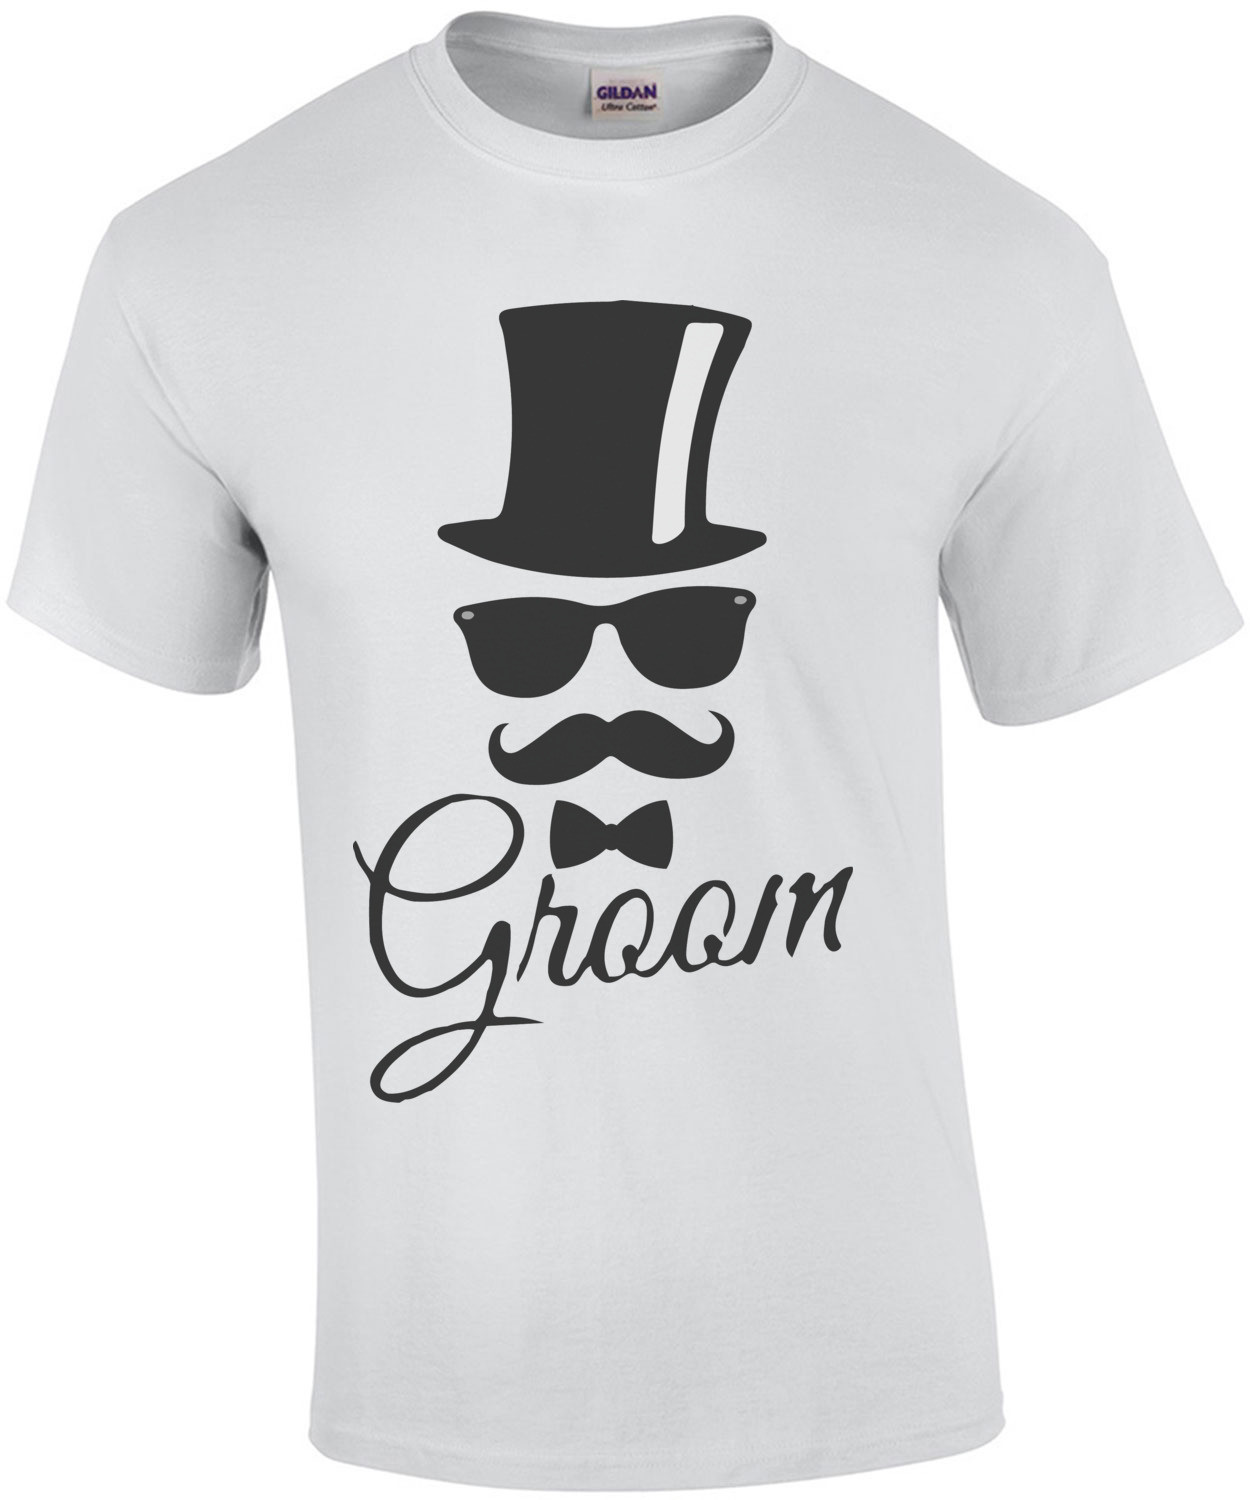 Groom Funny Wedding T Shirt Shirt